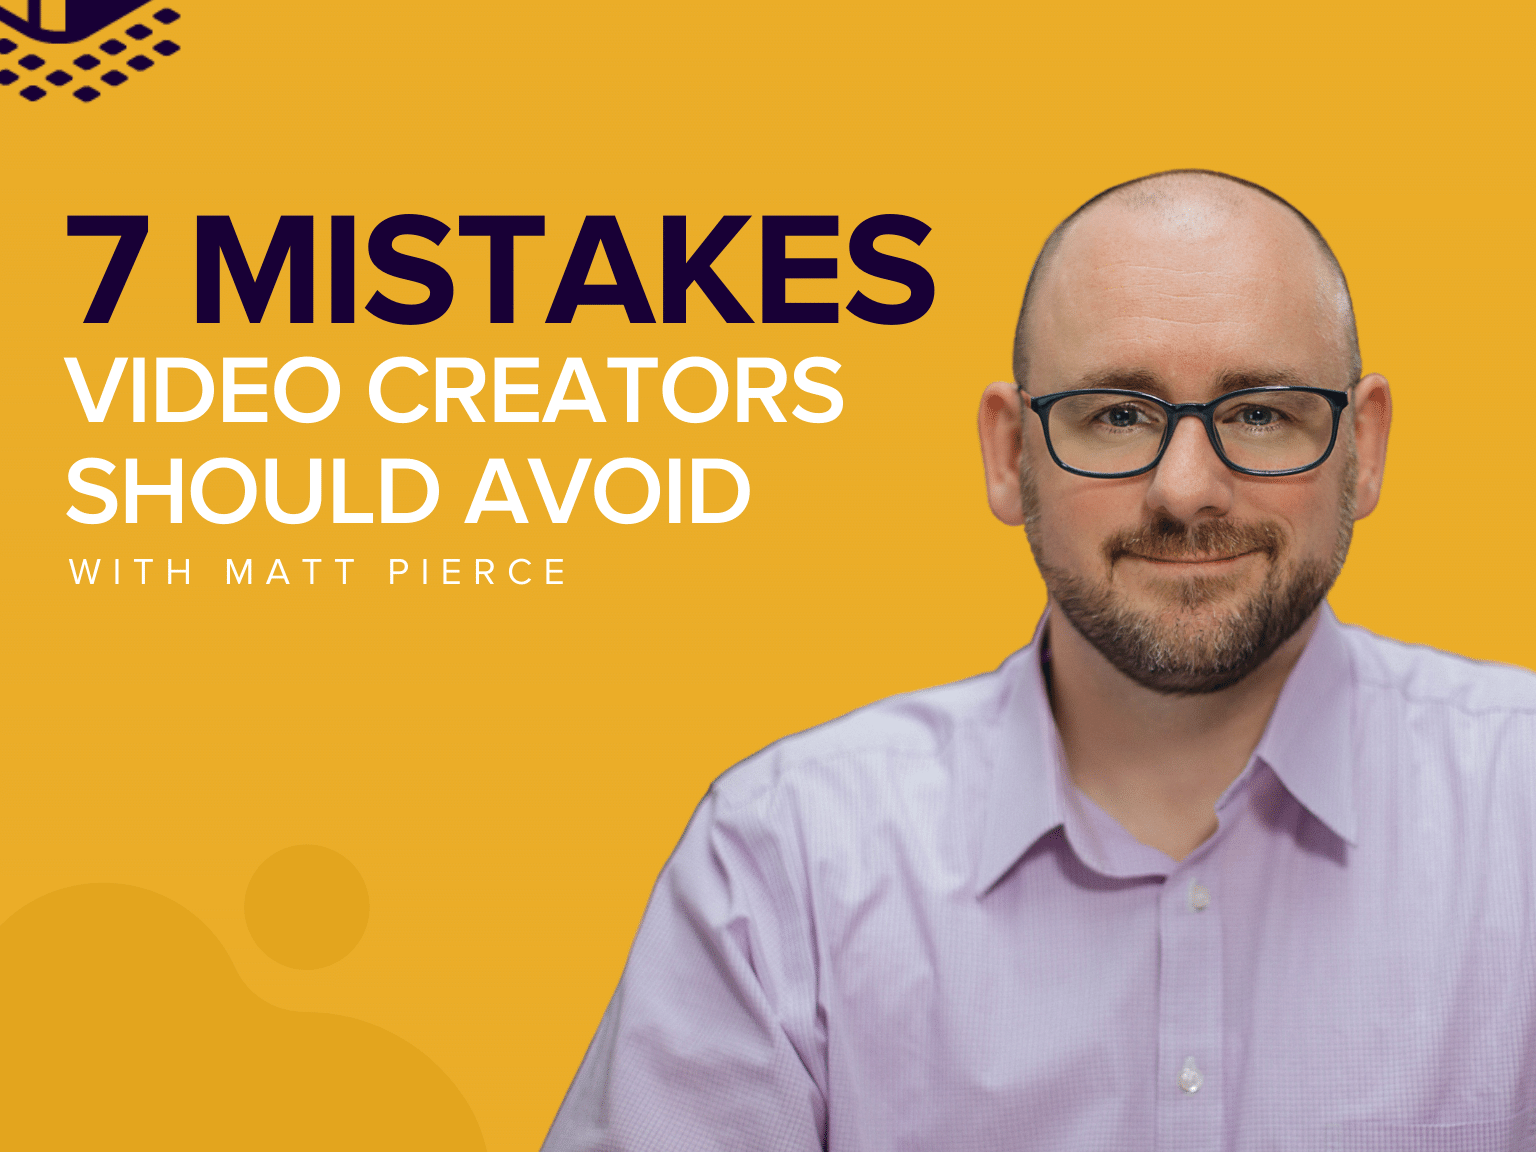 7 Mistakes Video Creators Should Avoid